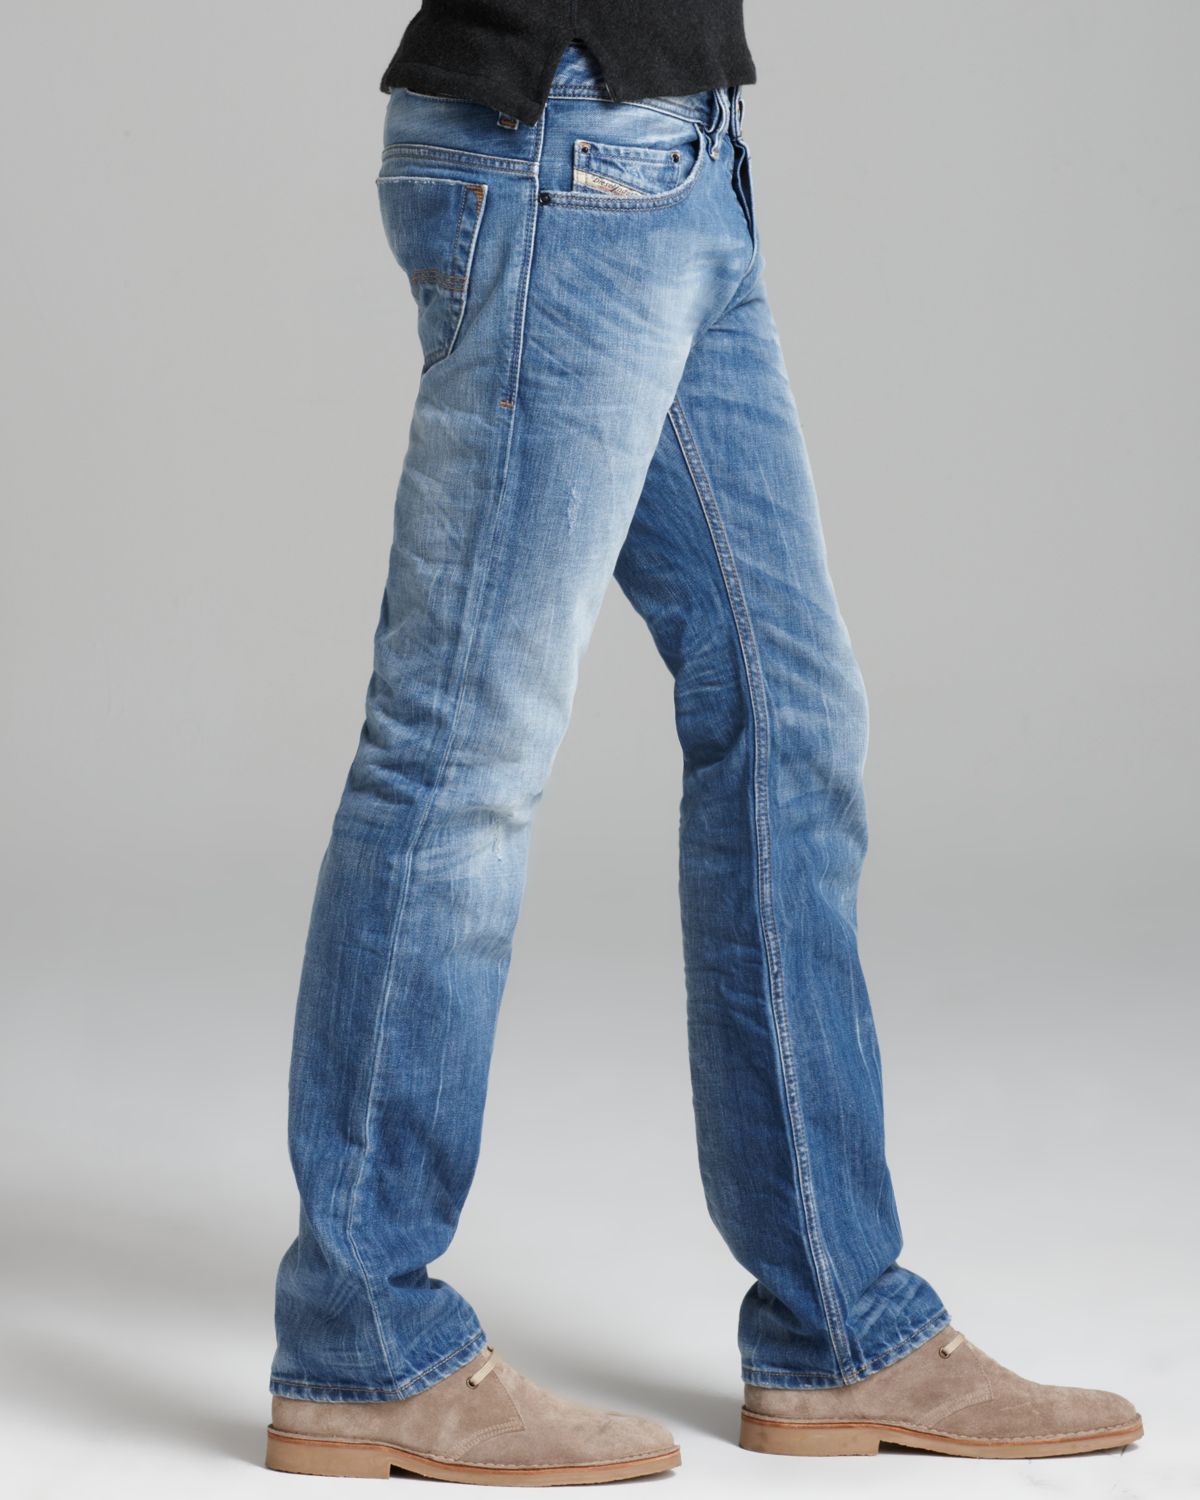 DIESEL Denim Jeans - Safado Straight Fit In Sky in Blue for Men - Lyst